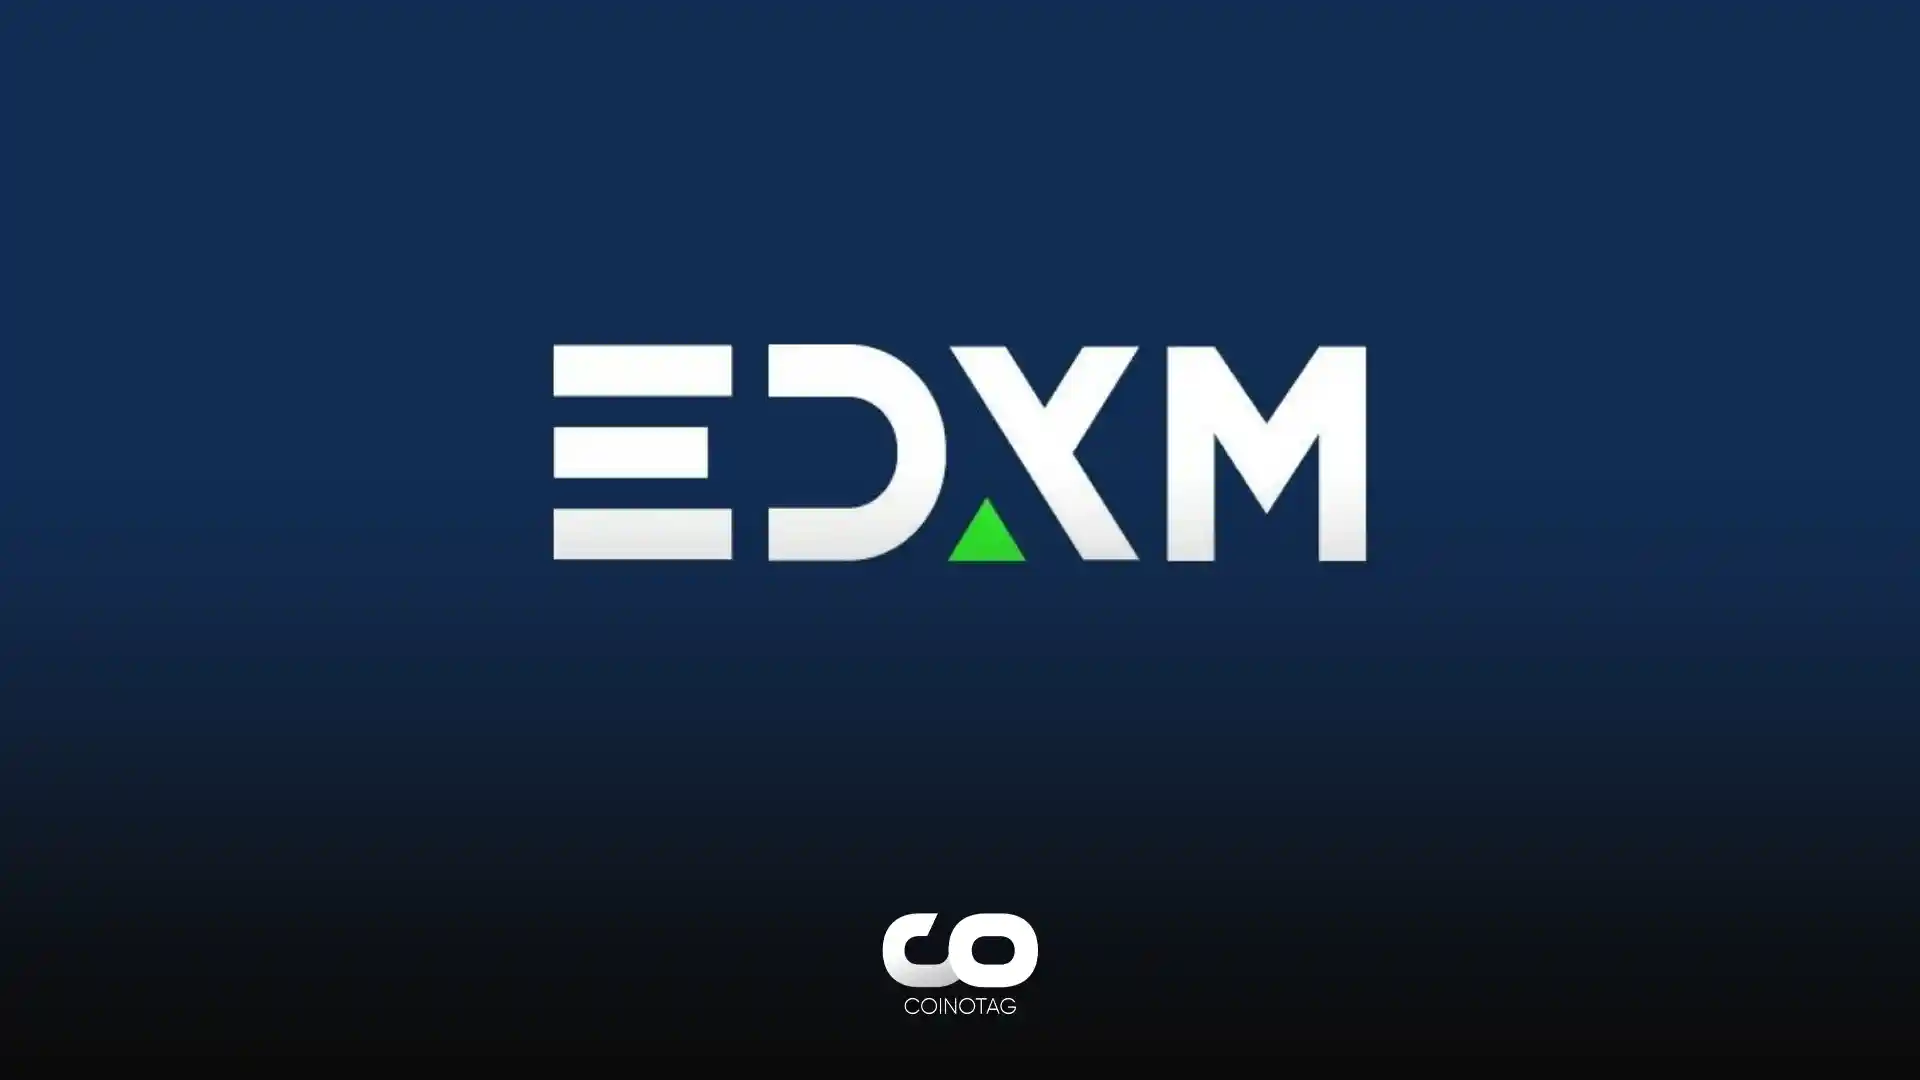 EDX-Markets